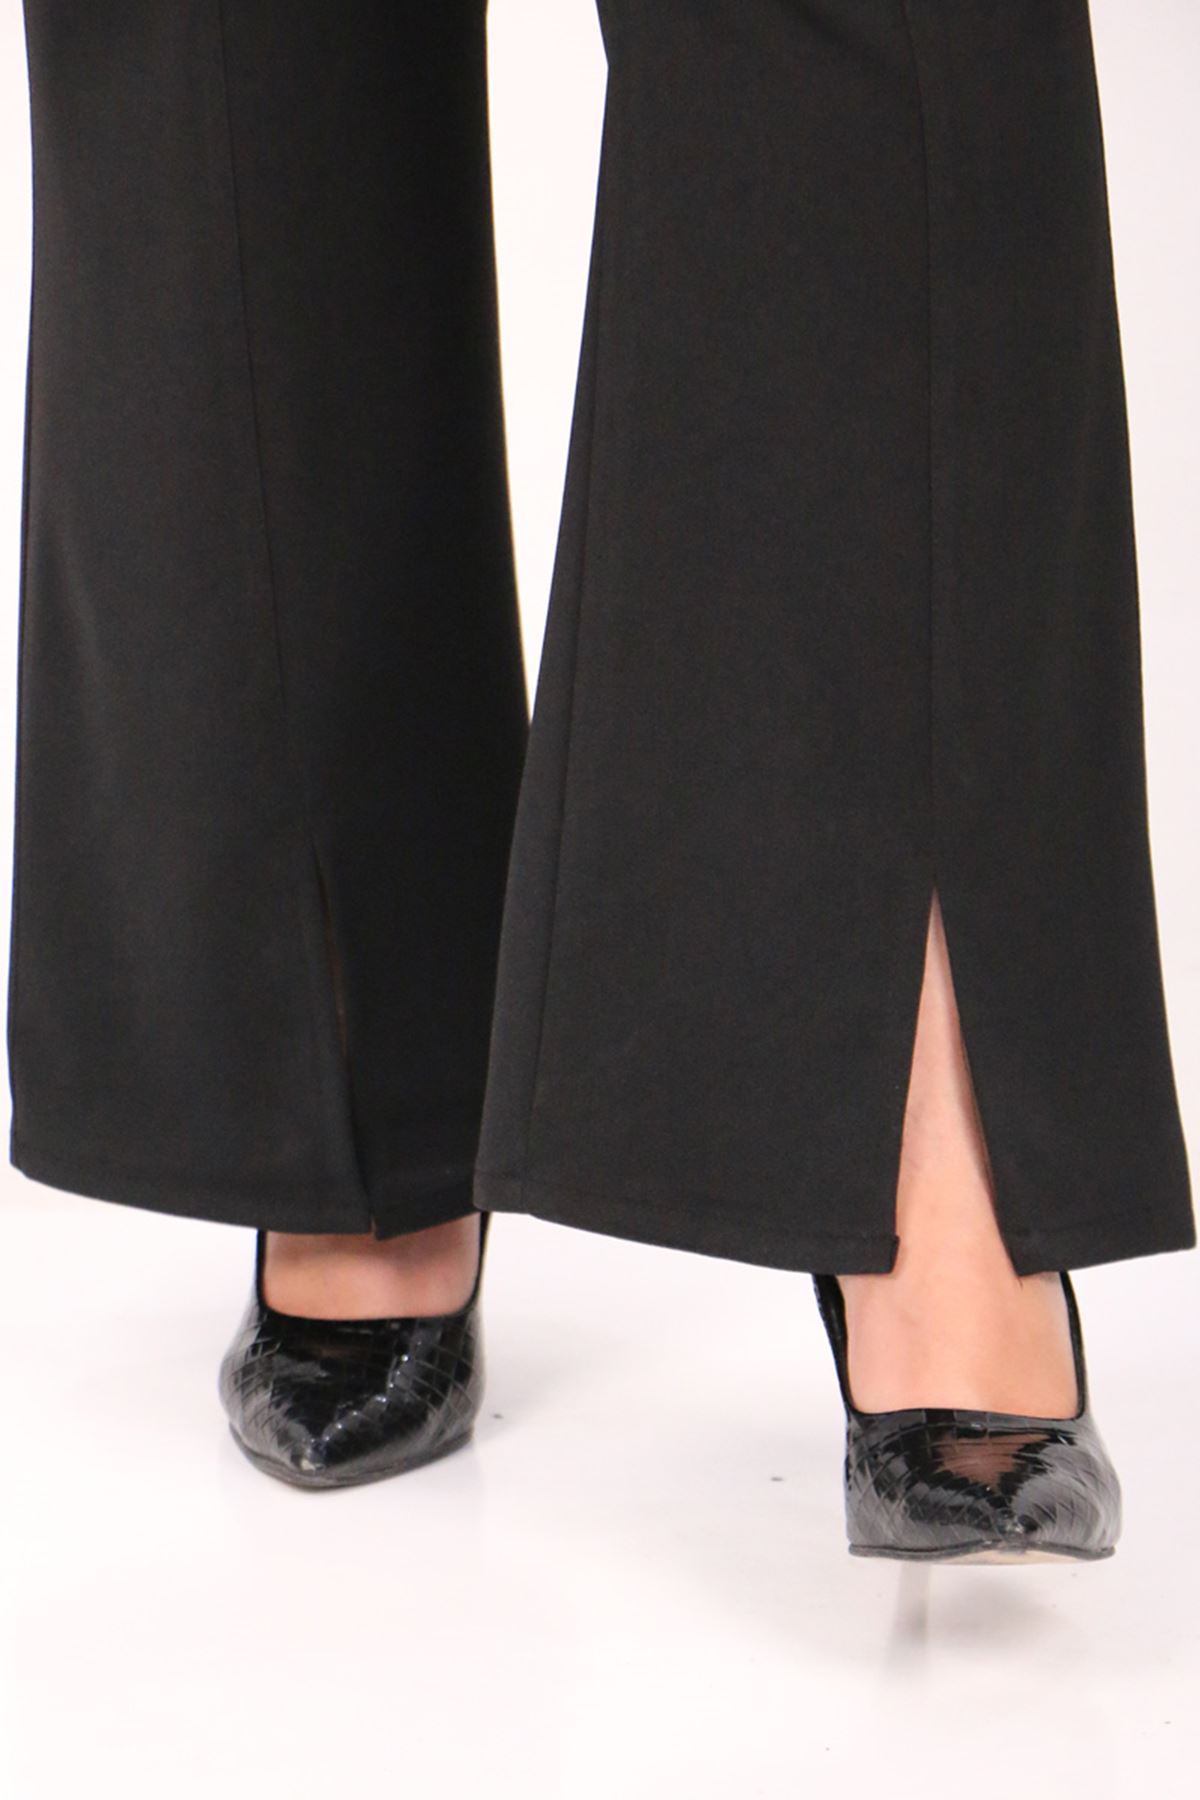 39031 Plus Size Front Slit Spanish Trousers - Black